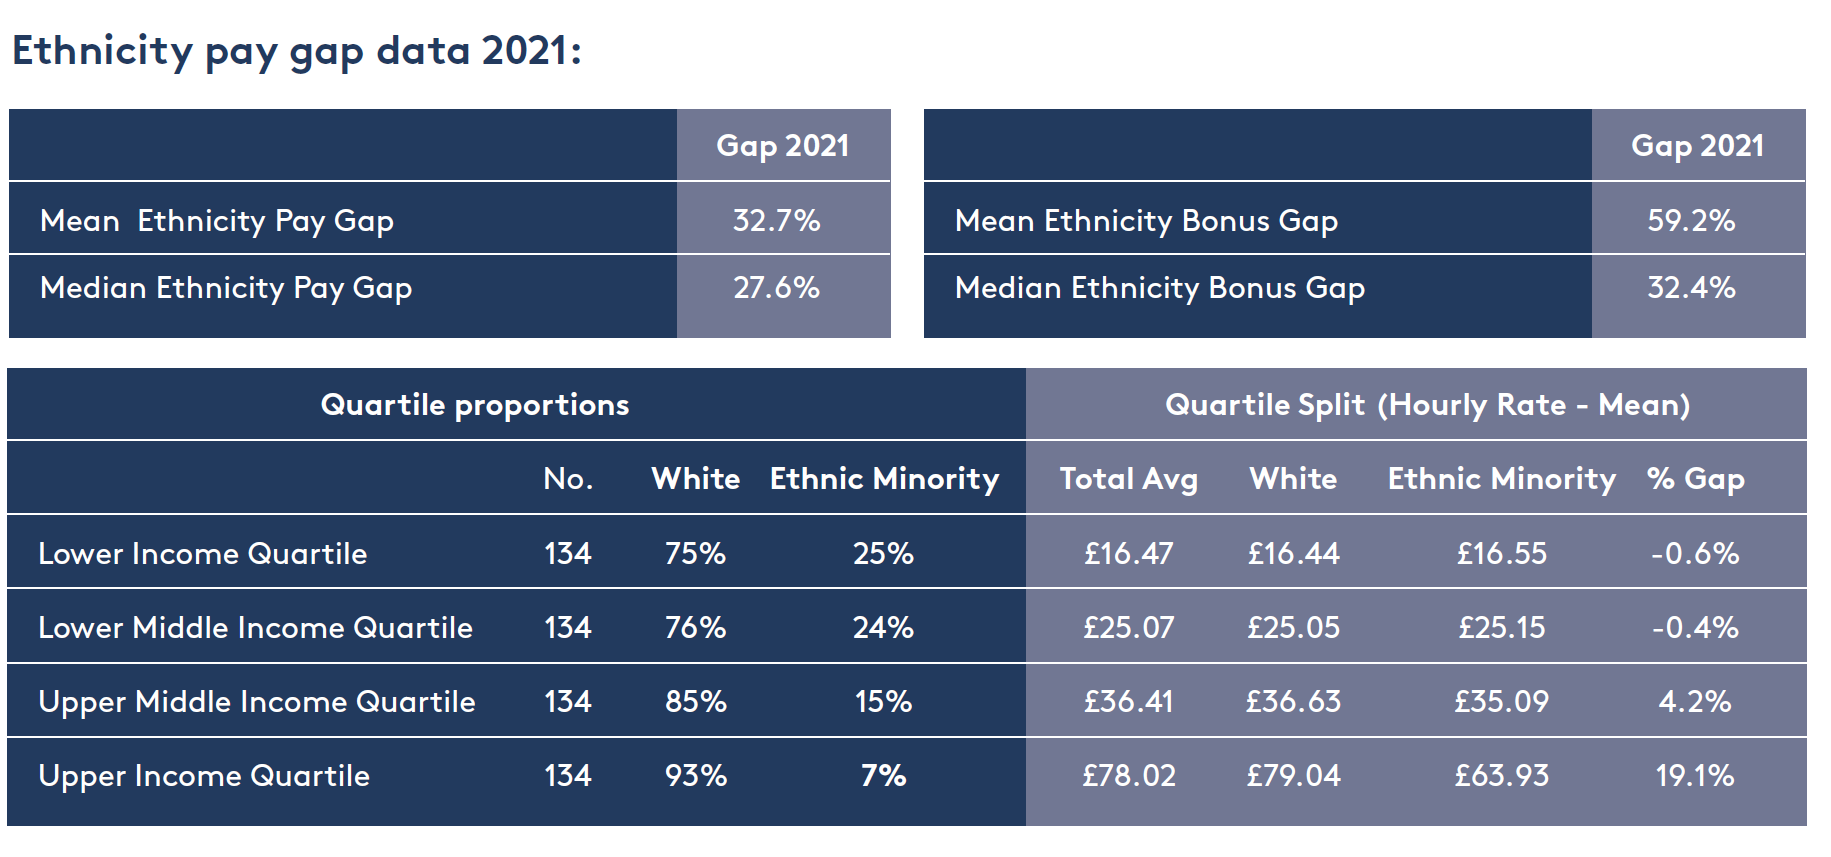 Ethnicity pay gap data 2021